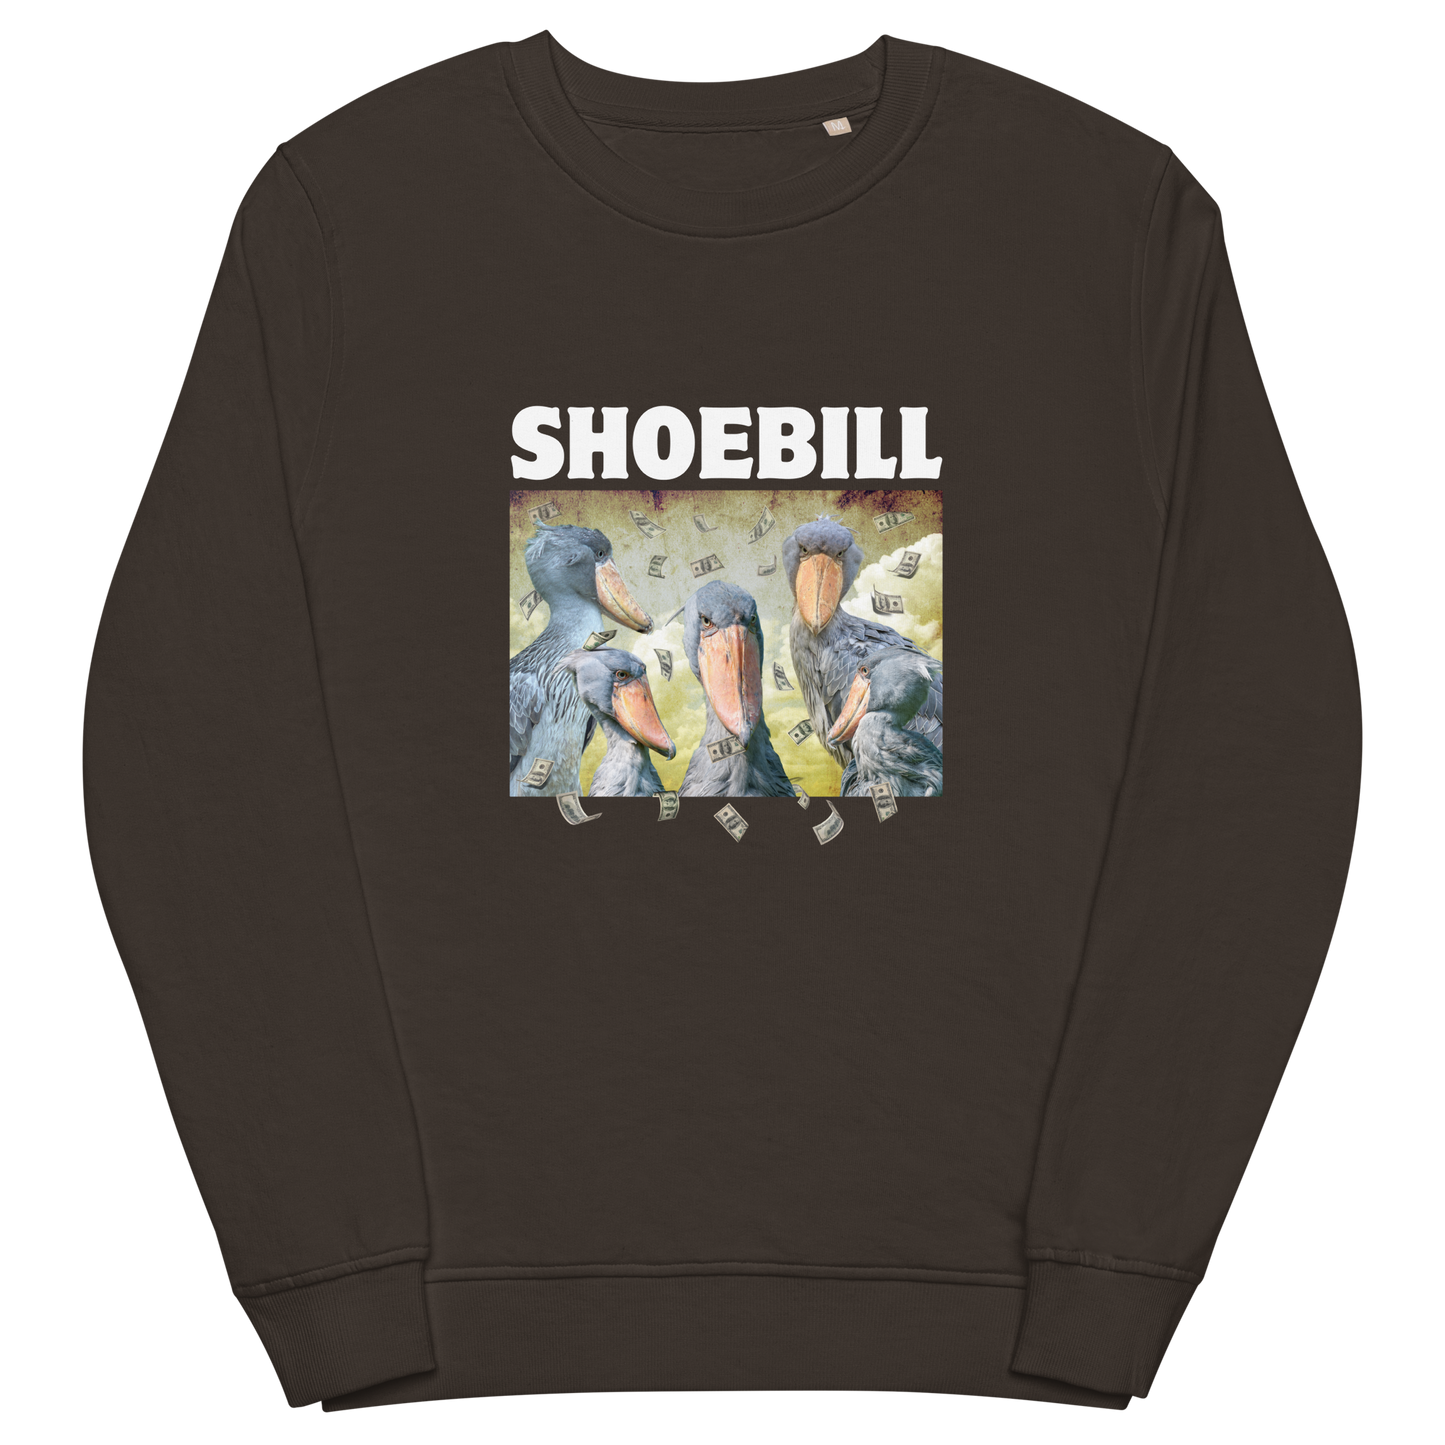 Deep Charcoal Grey Shoebill Organic Sweatshirt featuring a cool Shoebill graphic on the chest - ArtsyFunny Graphic Shoebill Stork Sweatshirts - Boozy Fox